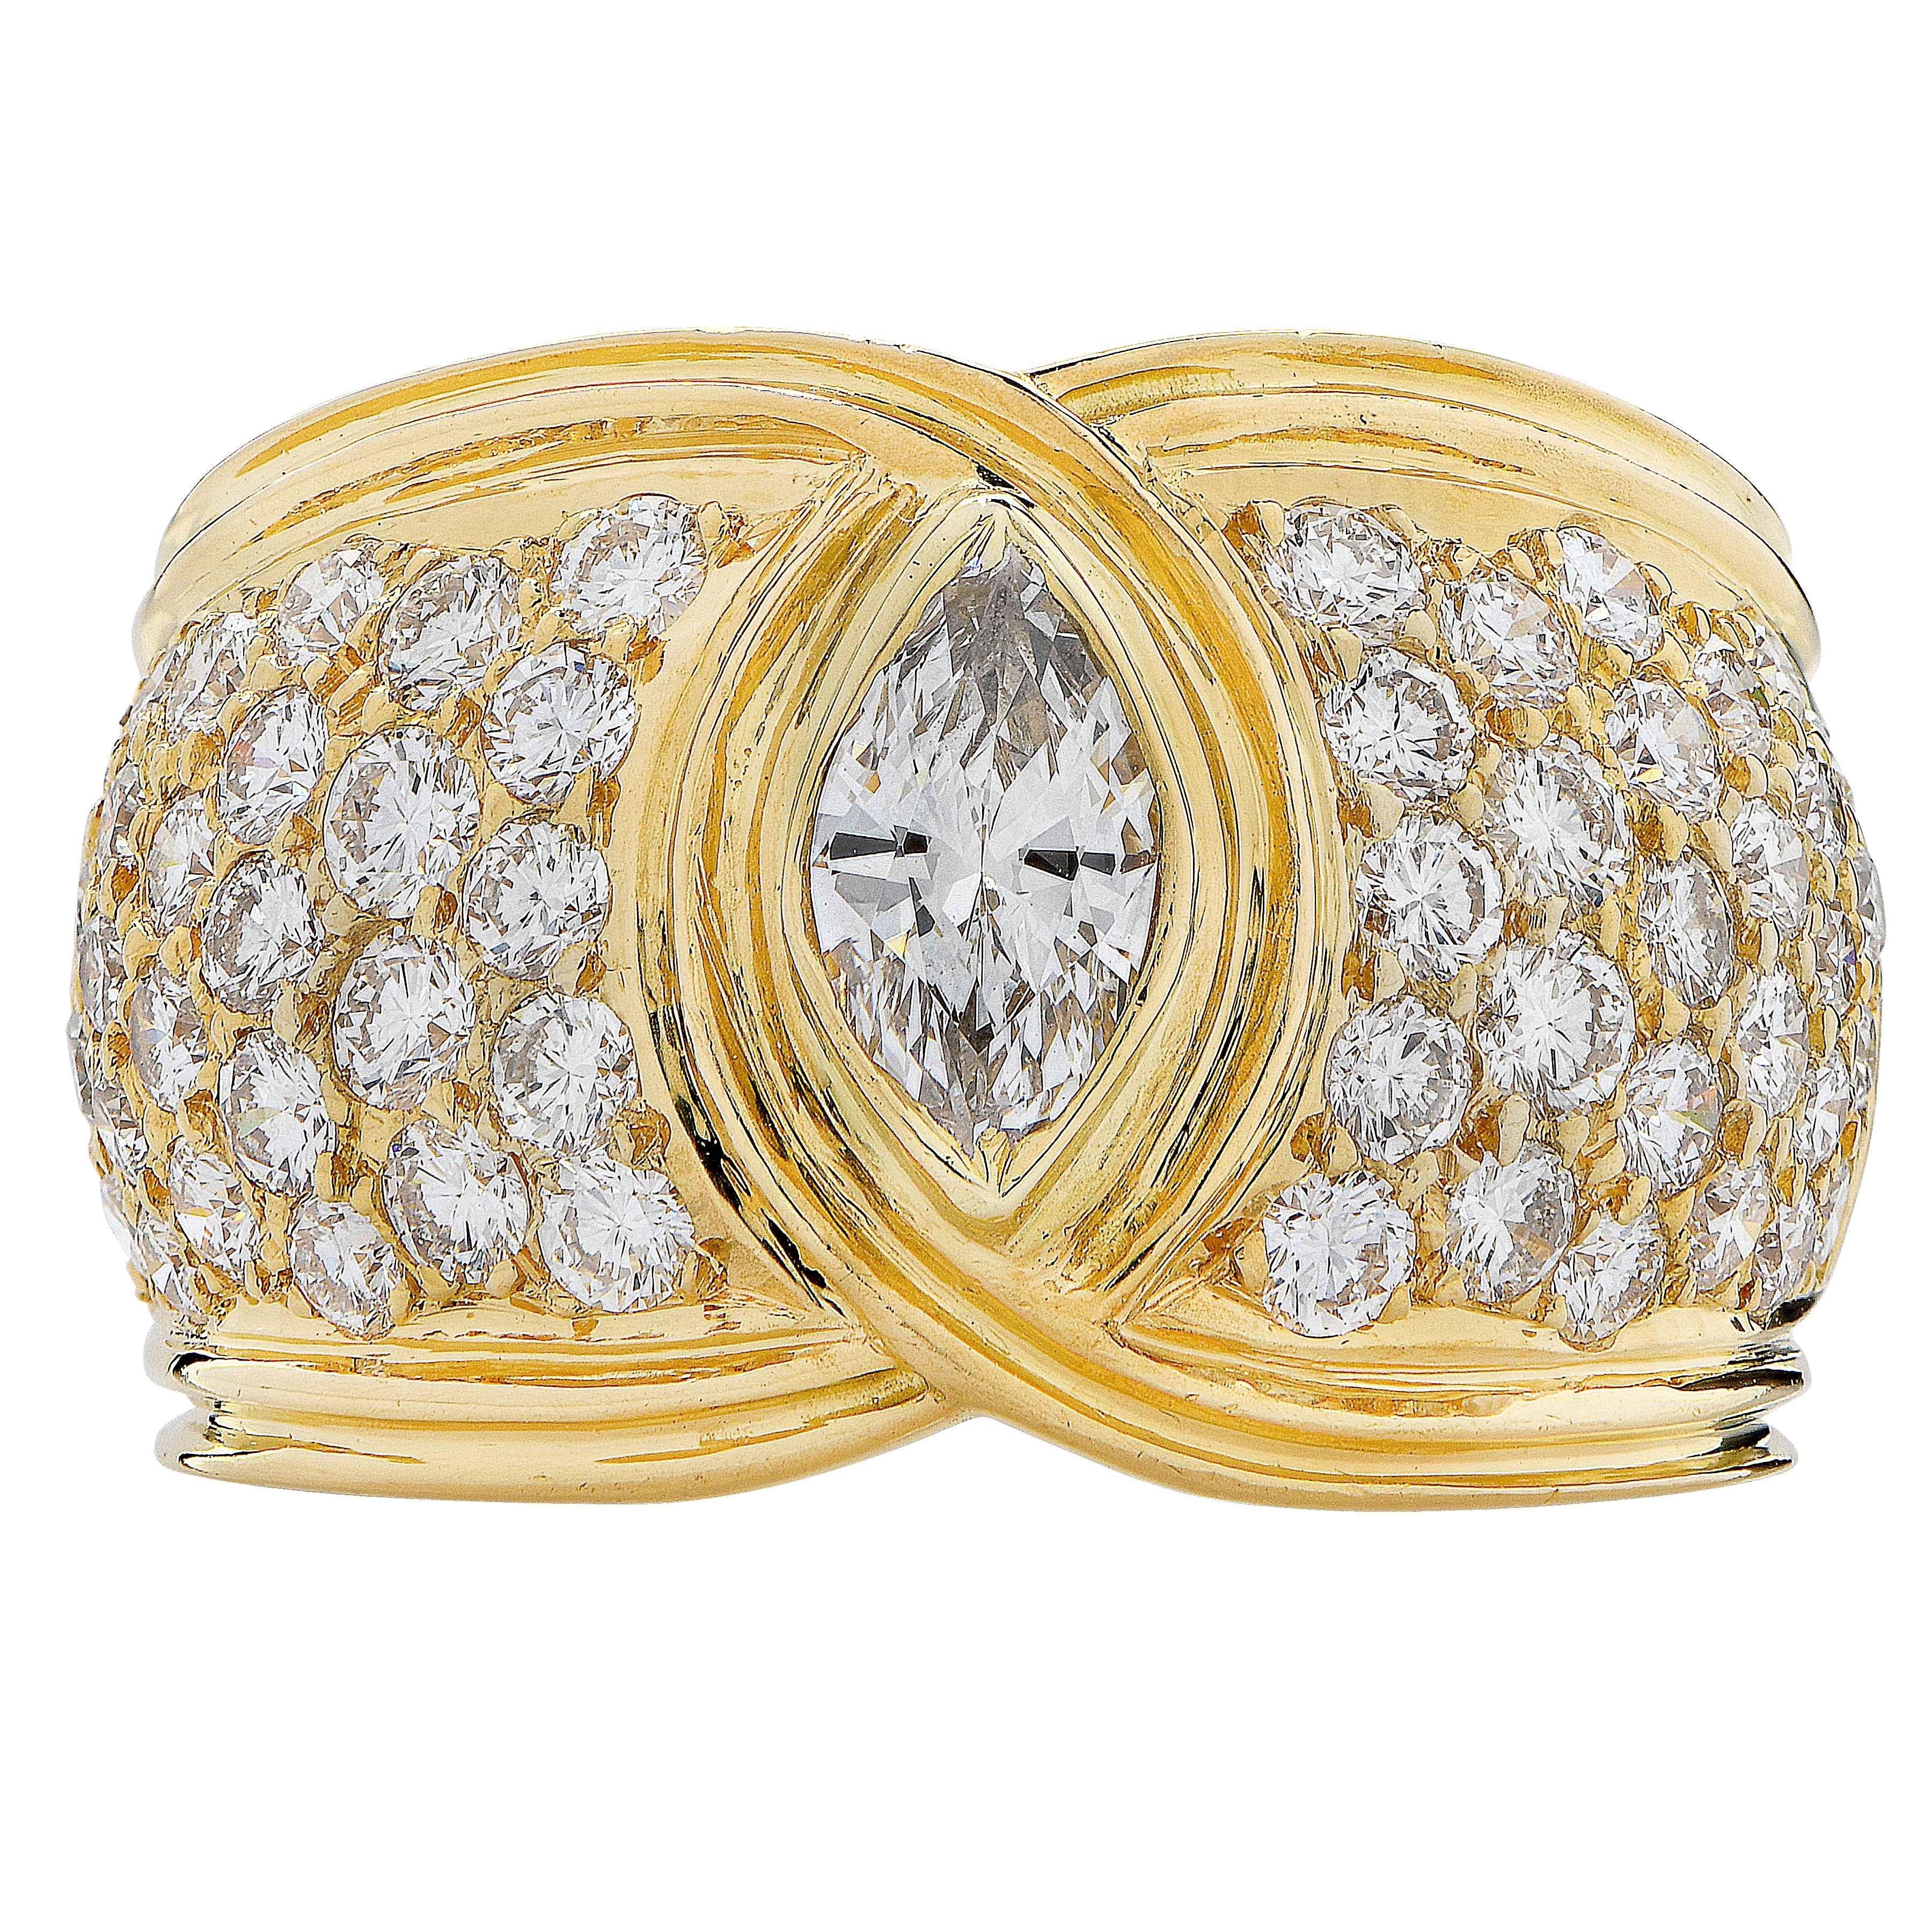 Marquise Cut 2.5 Carat Diamond Ring in 18 Karat Yellow Gold